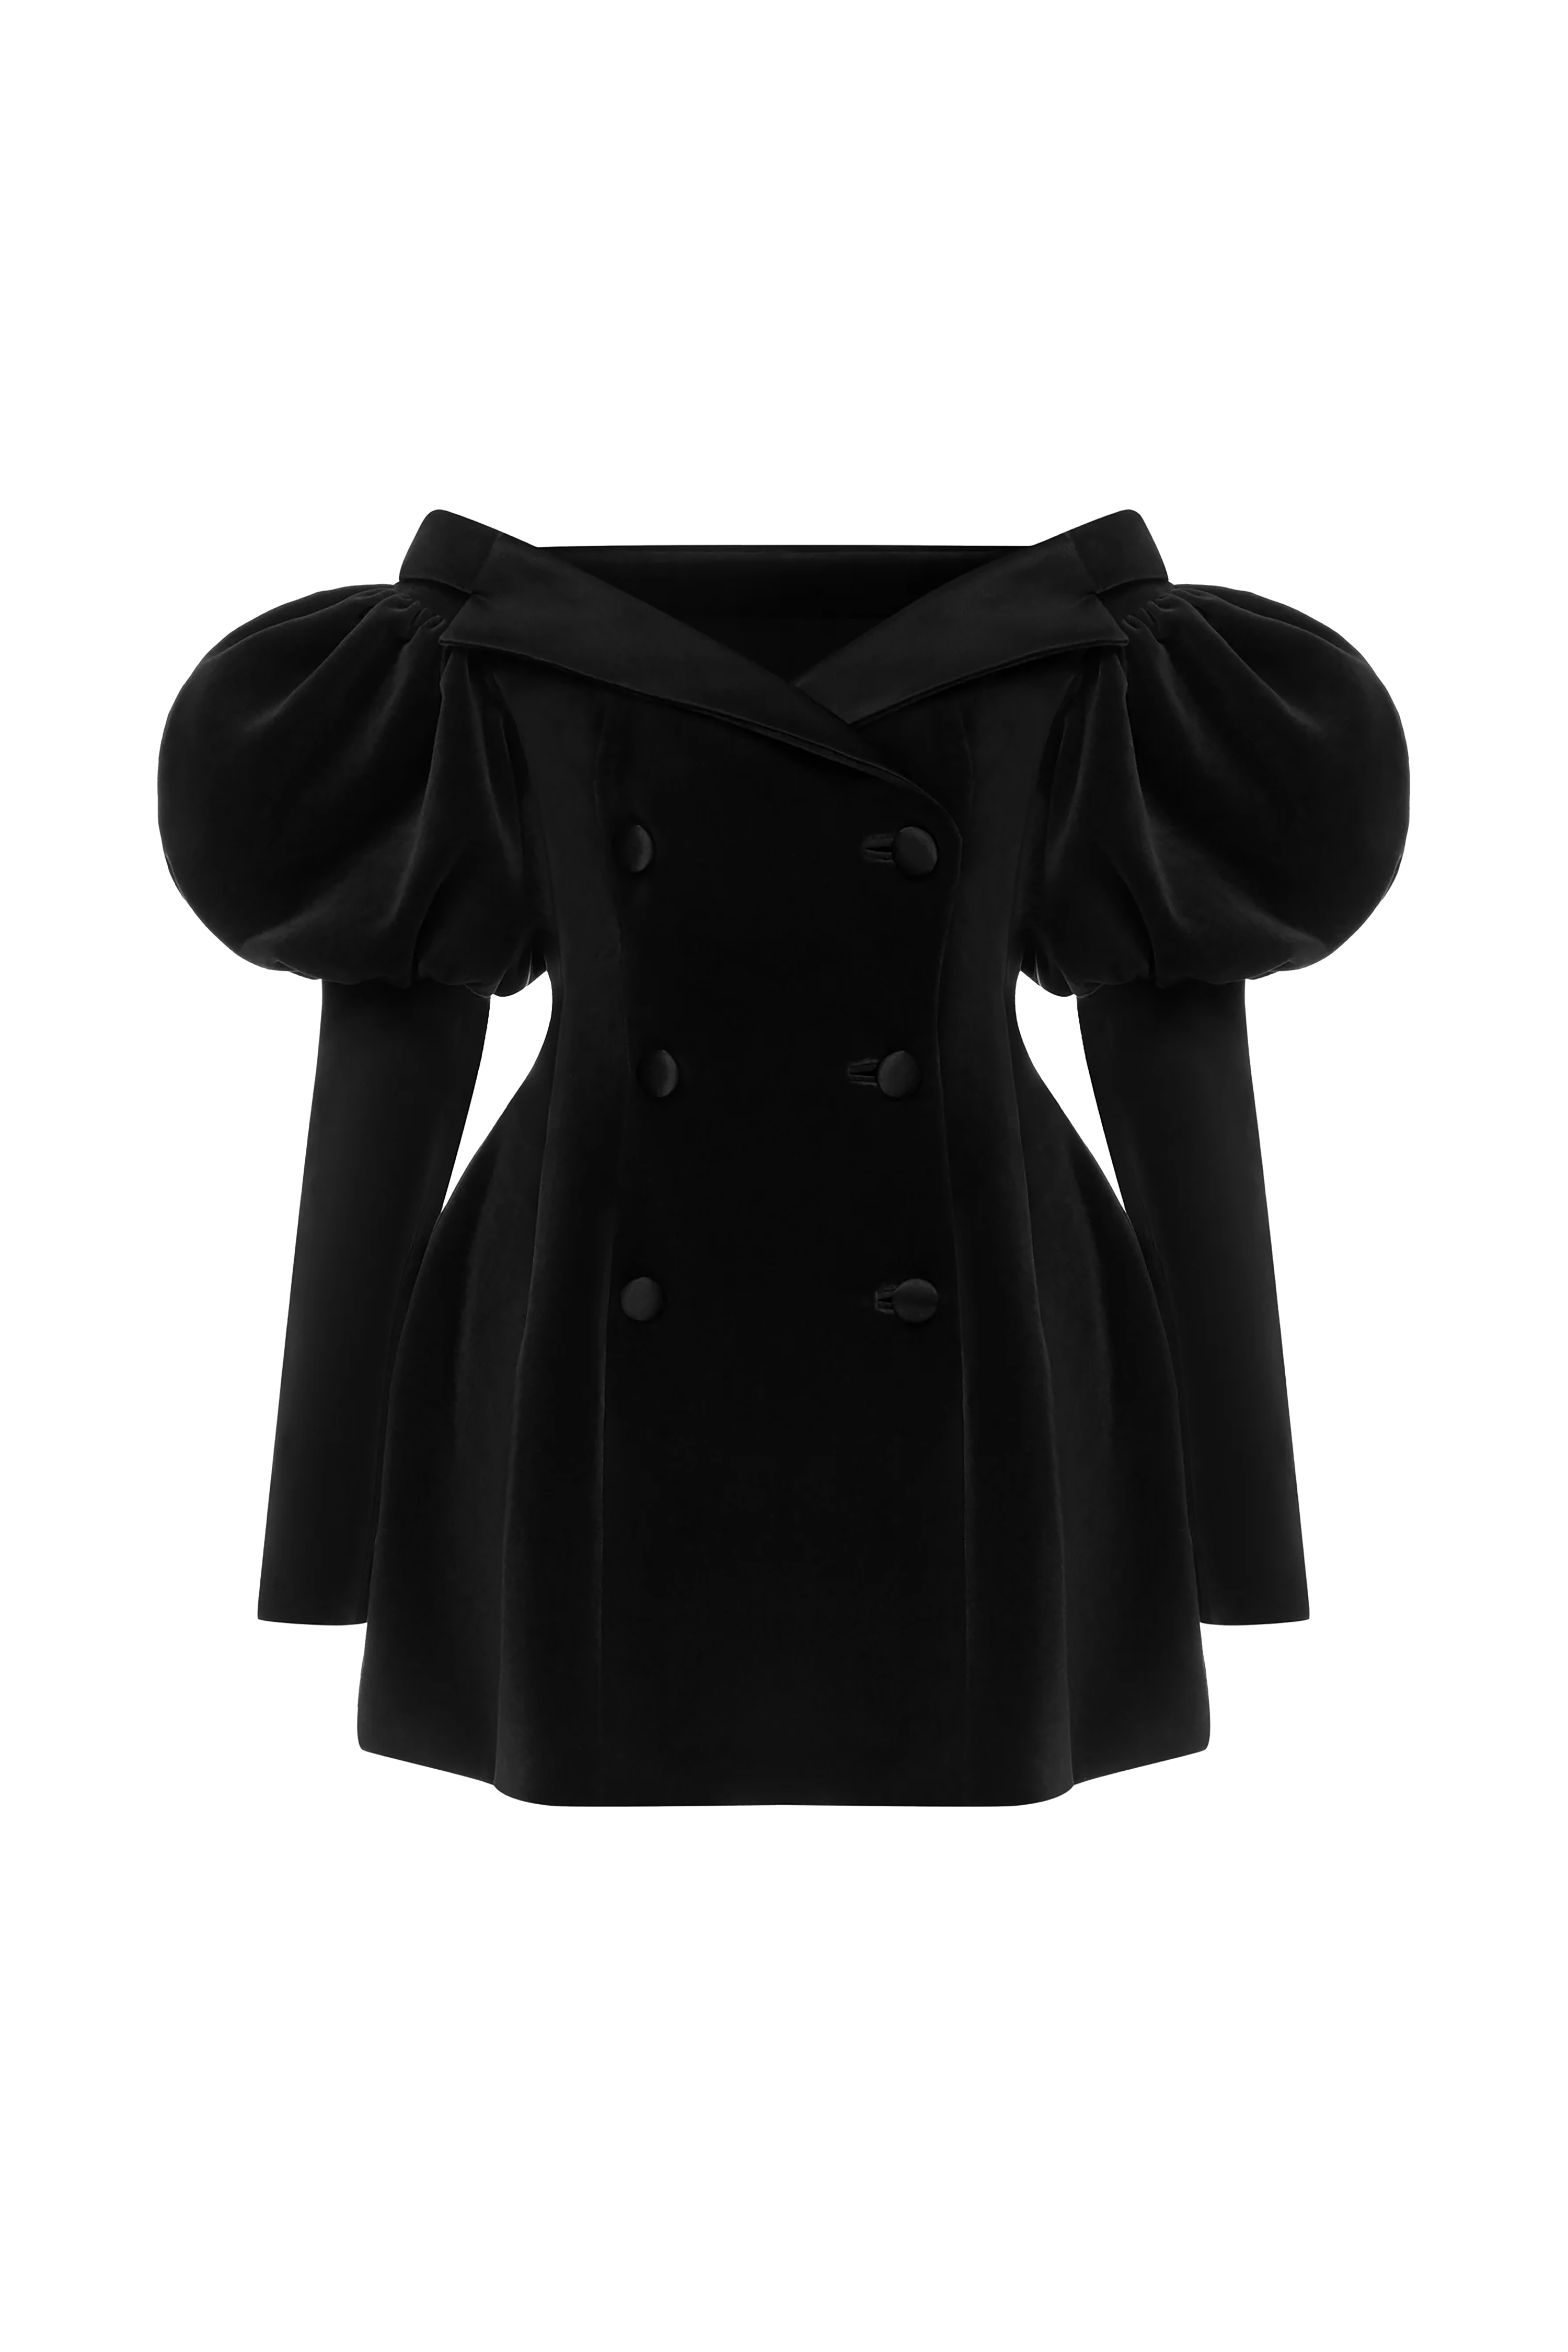 MARIANNA SENCHINA Eye Candy Mini Dress in Black & White